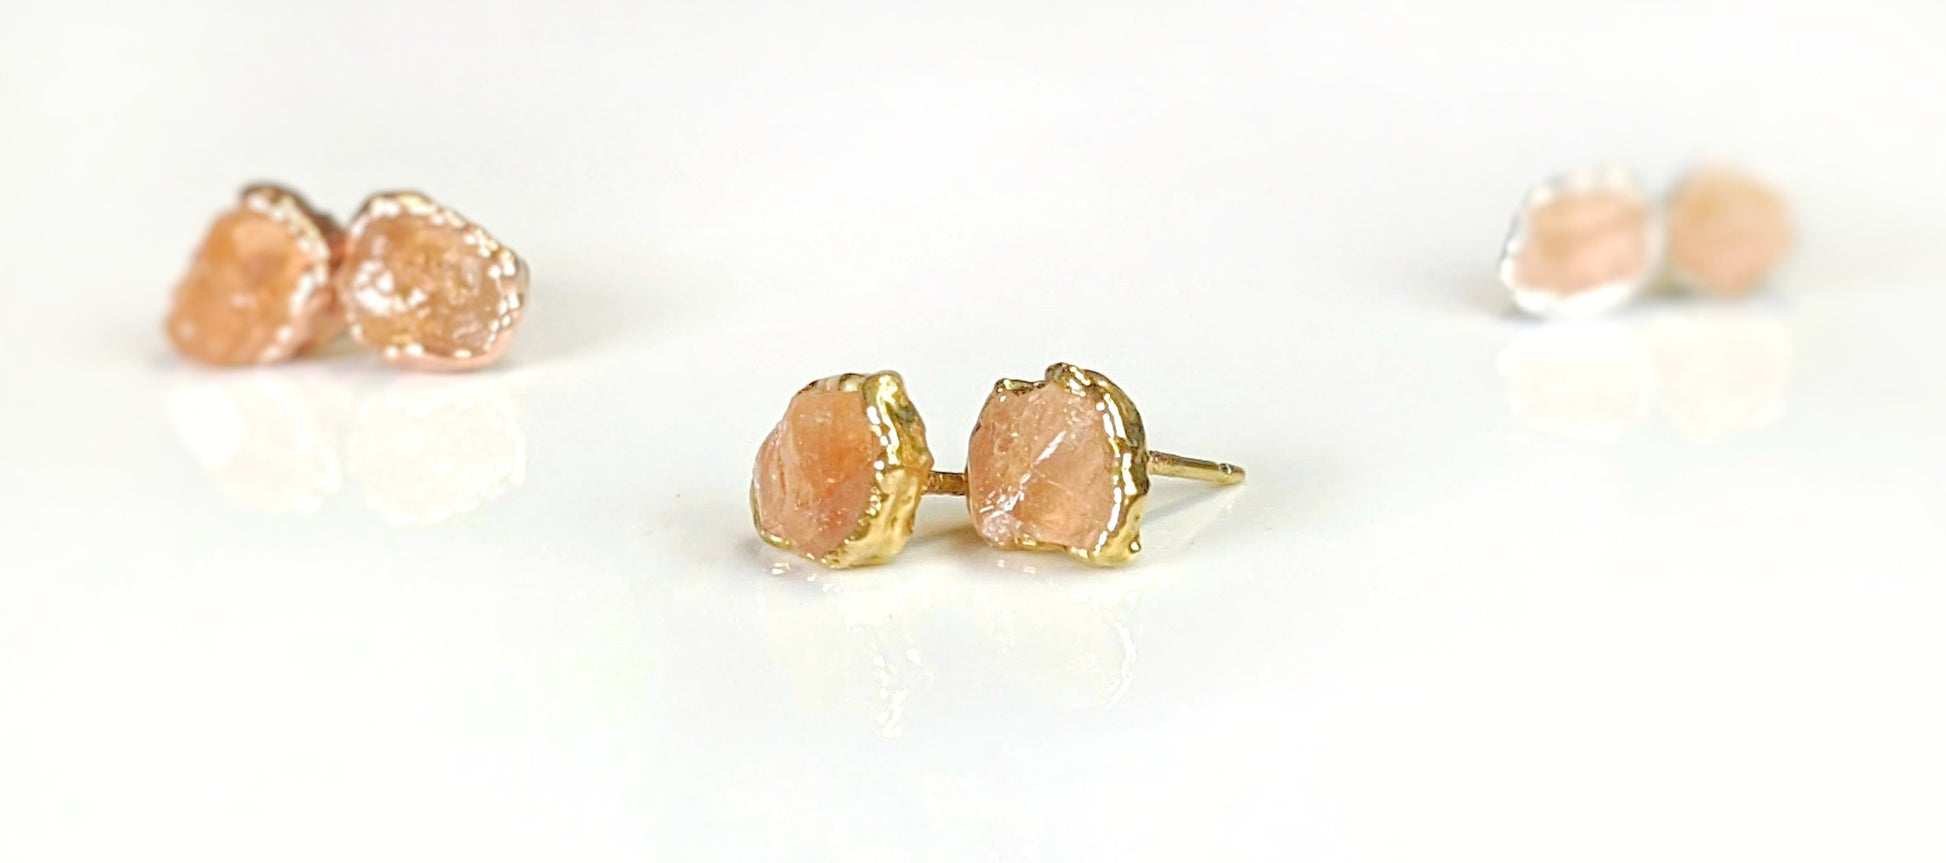 Raw Golden Imperial Topaz stud earrings in unique 18k Gold setting